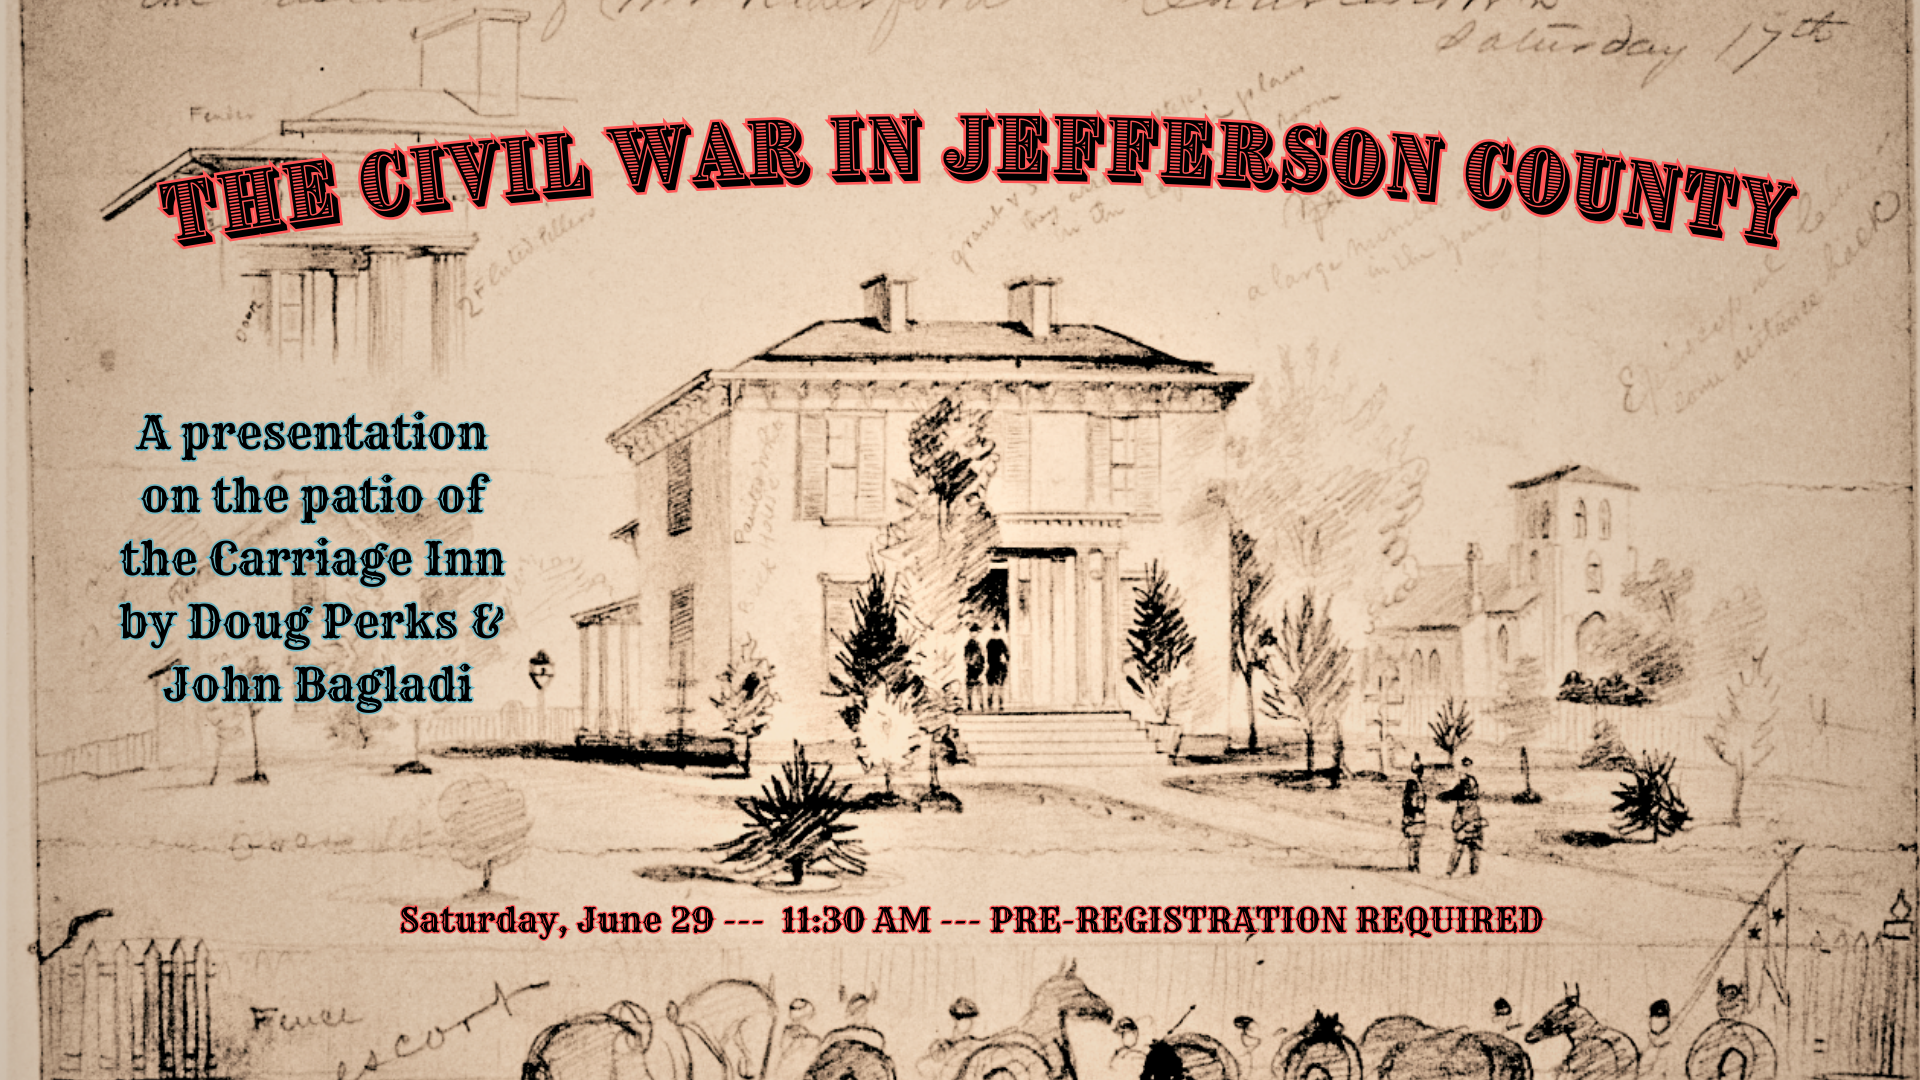 The Civil War in Jefferson County